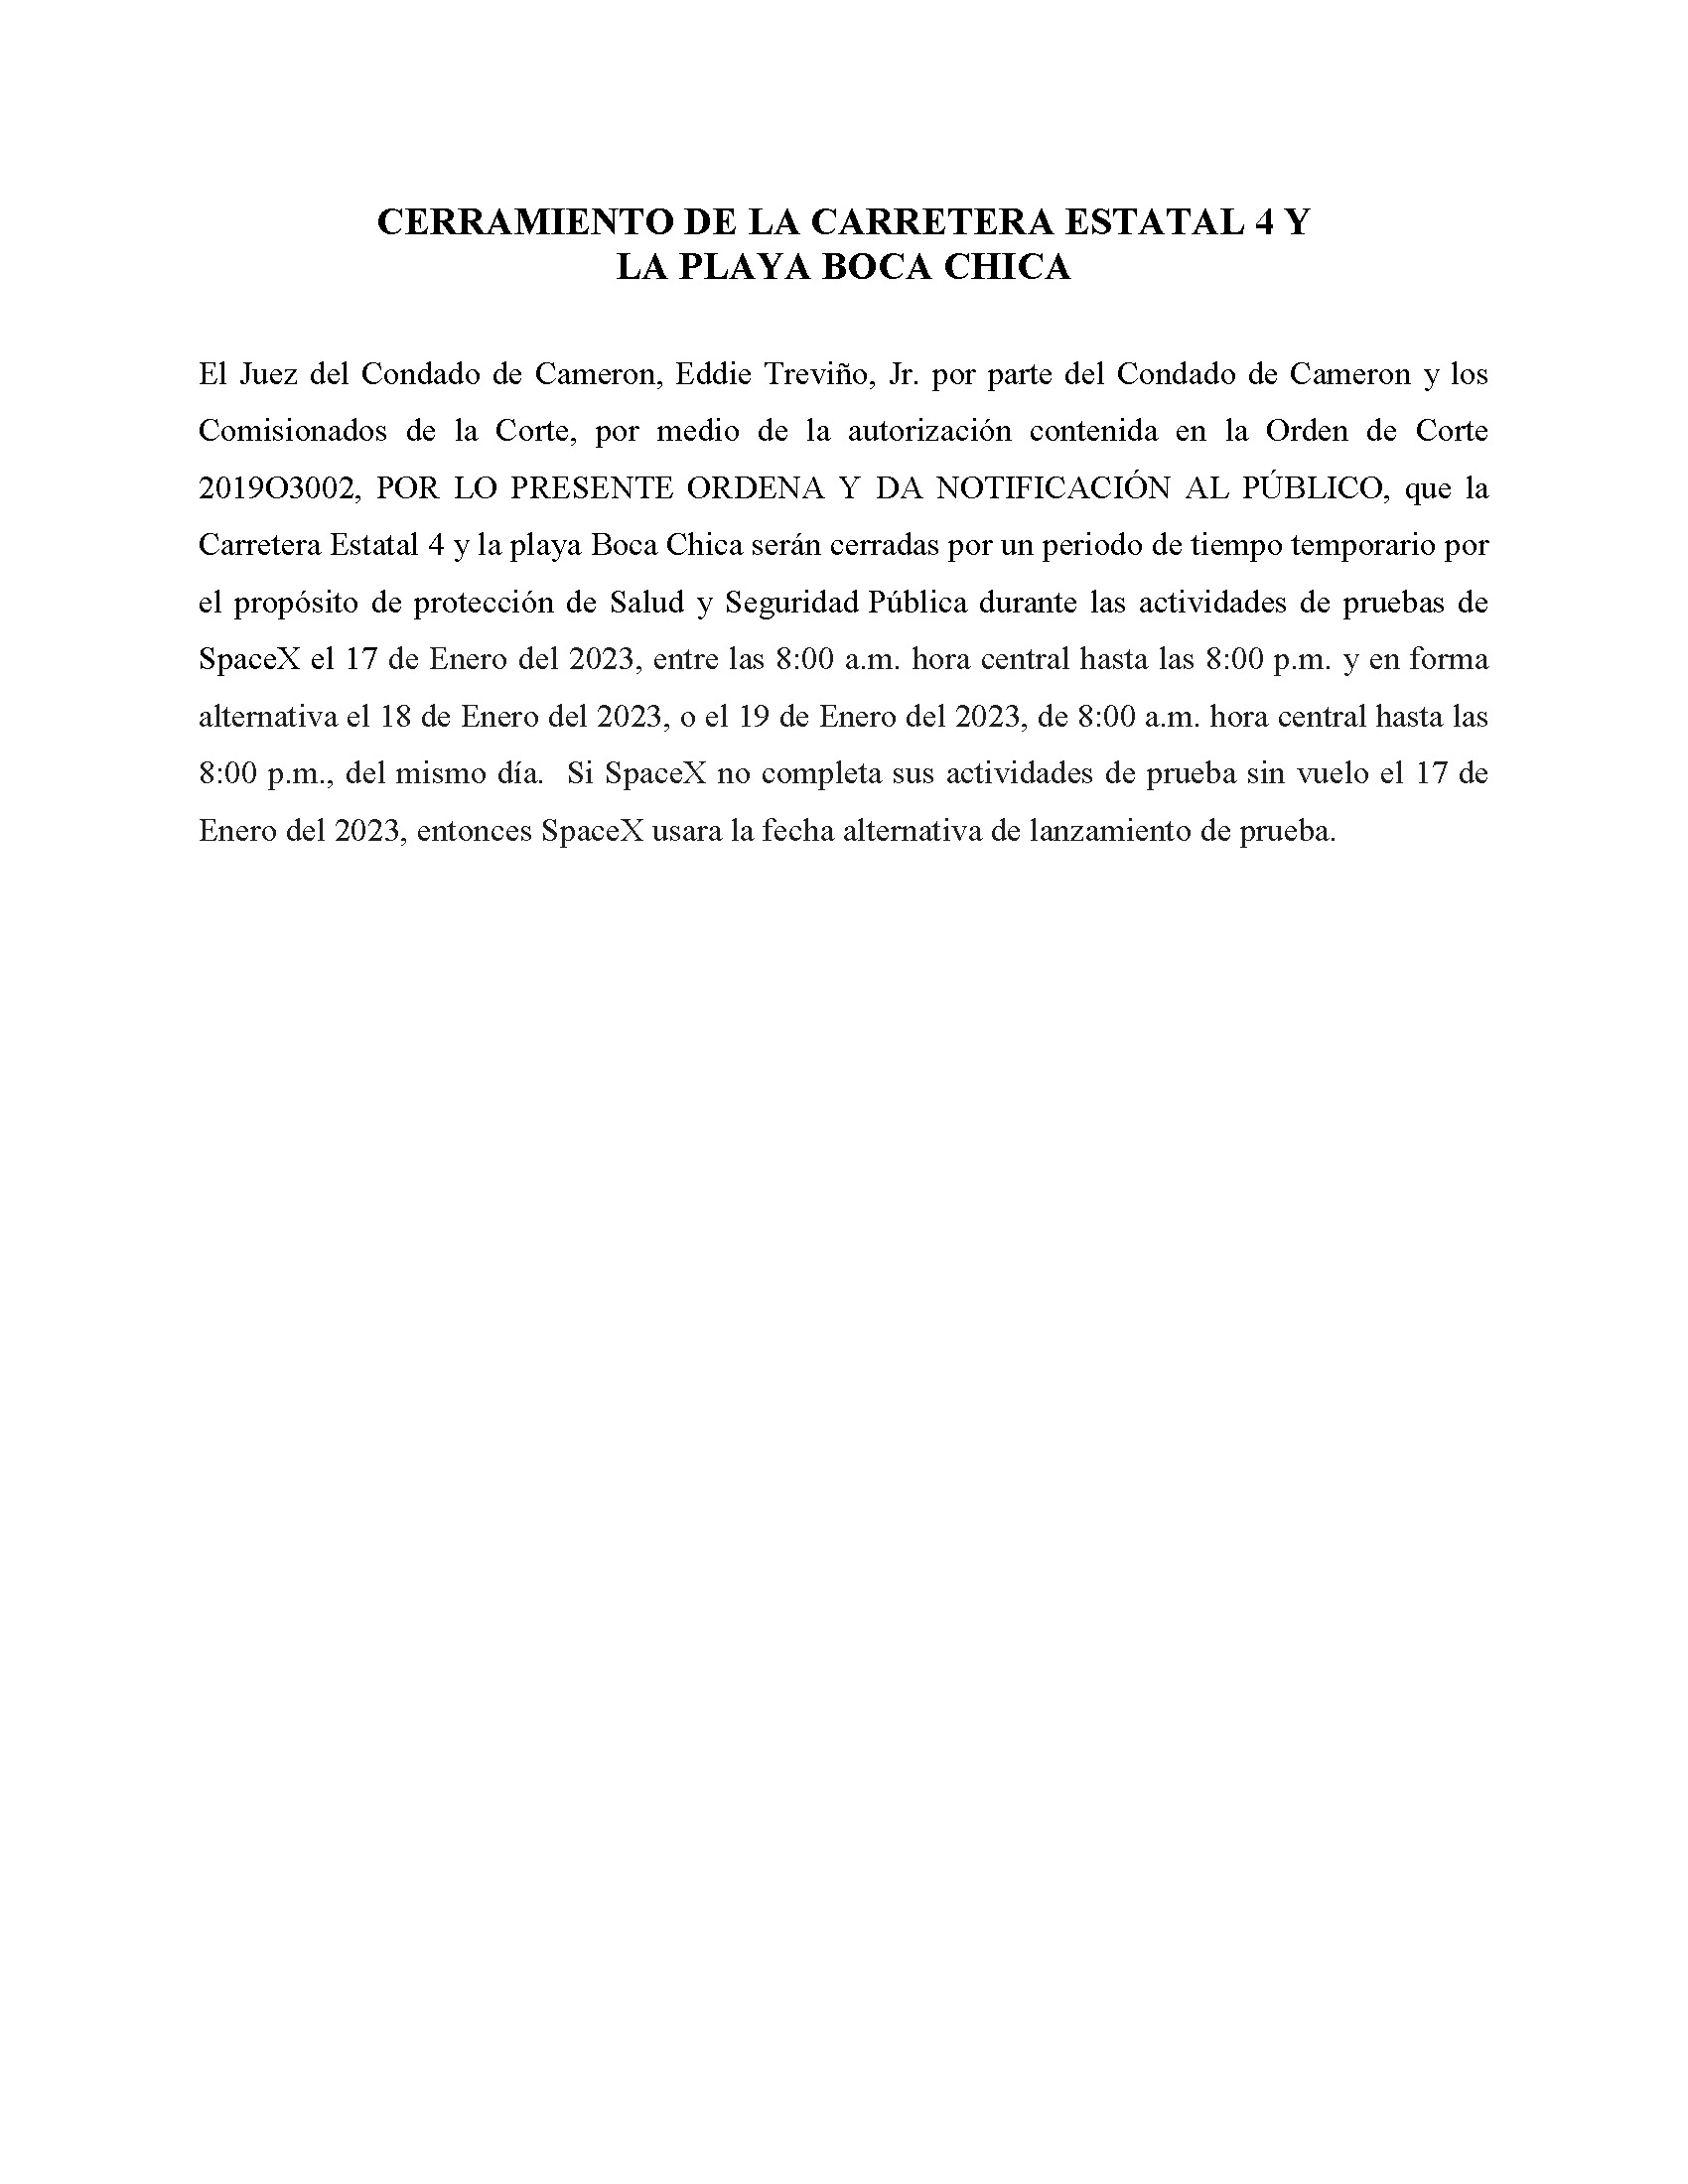 ORDER.CLOSURE OF HIGHWAY 4 Y LA PLAYA BOCA CHICA.SPANISH.01.17.23